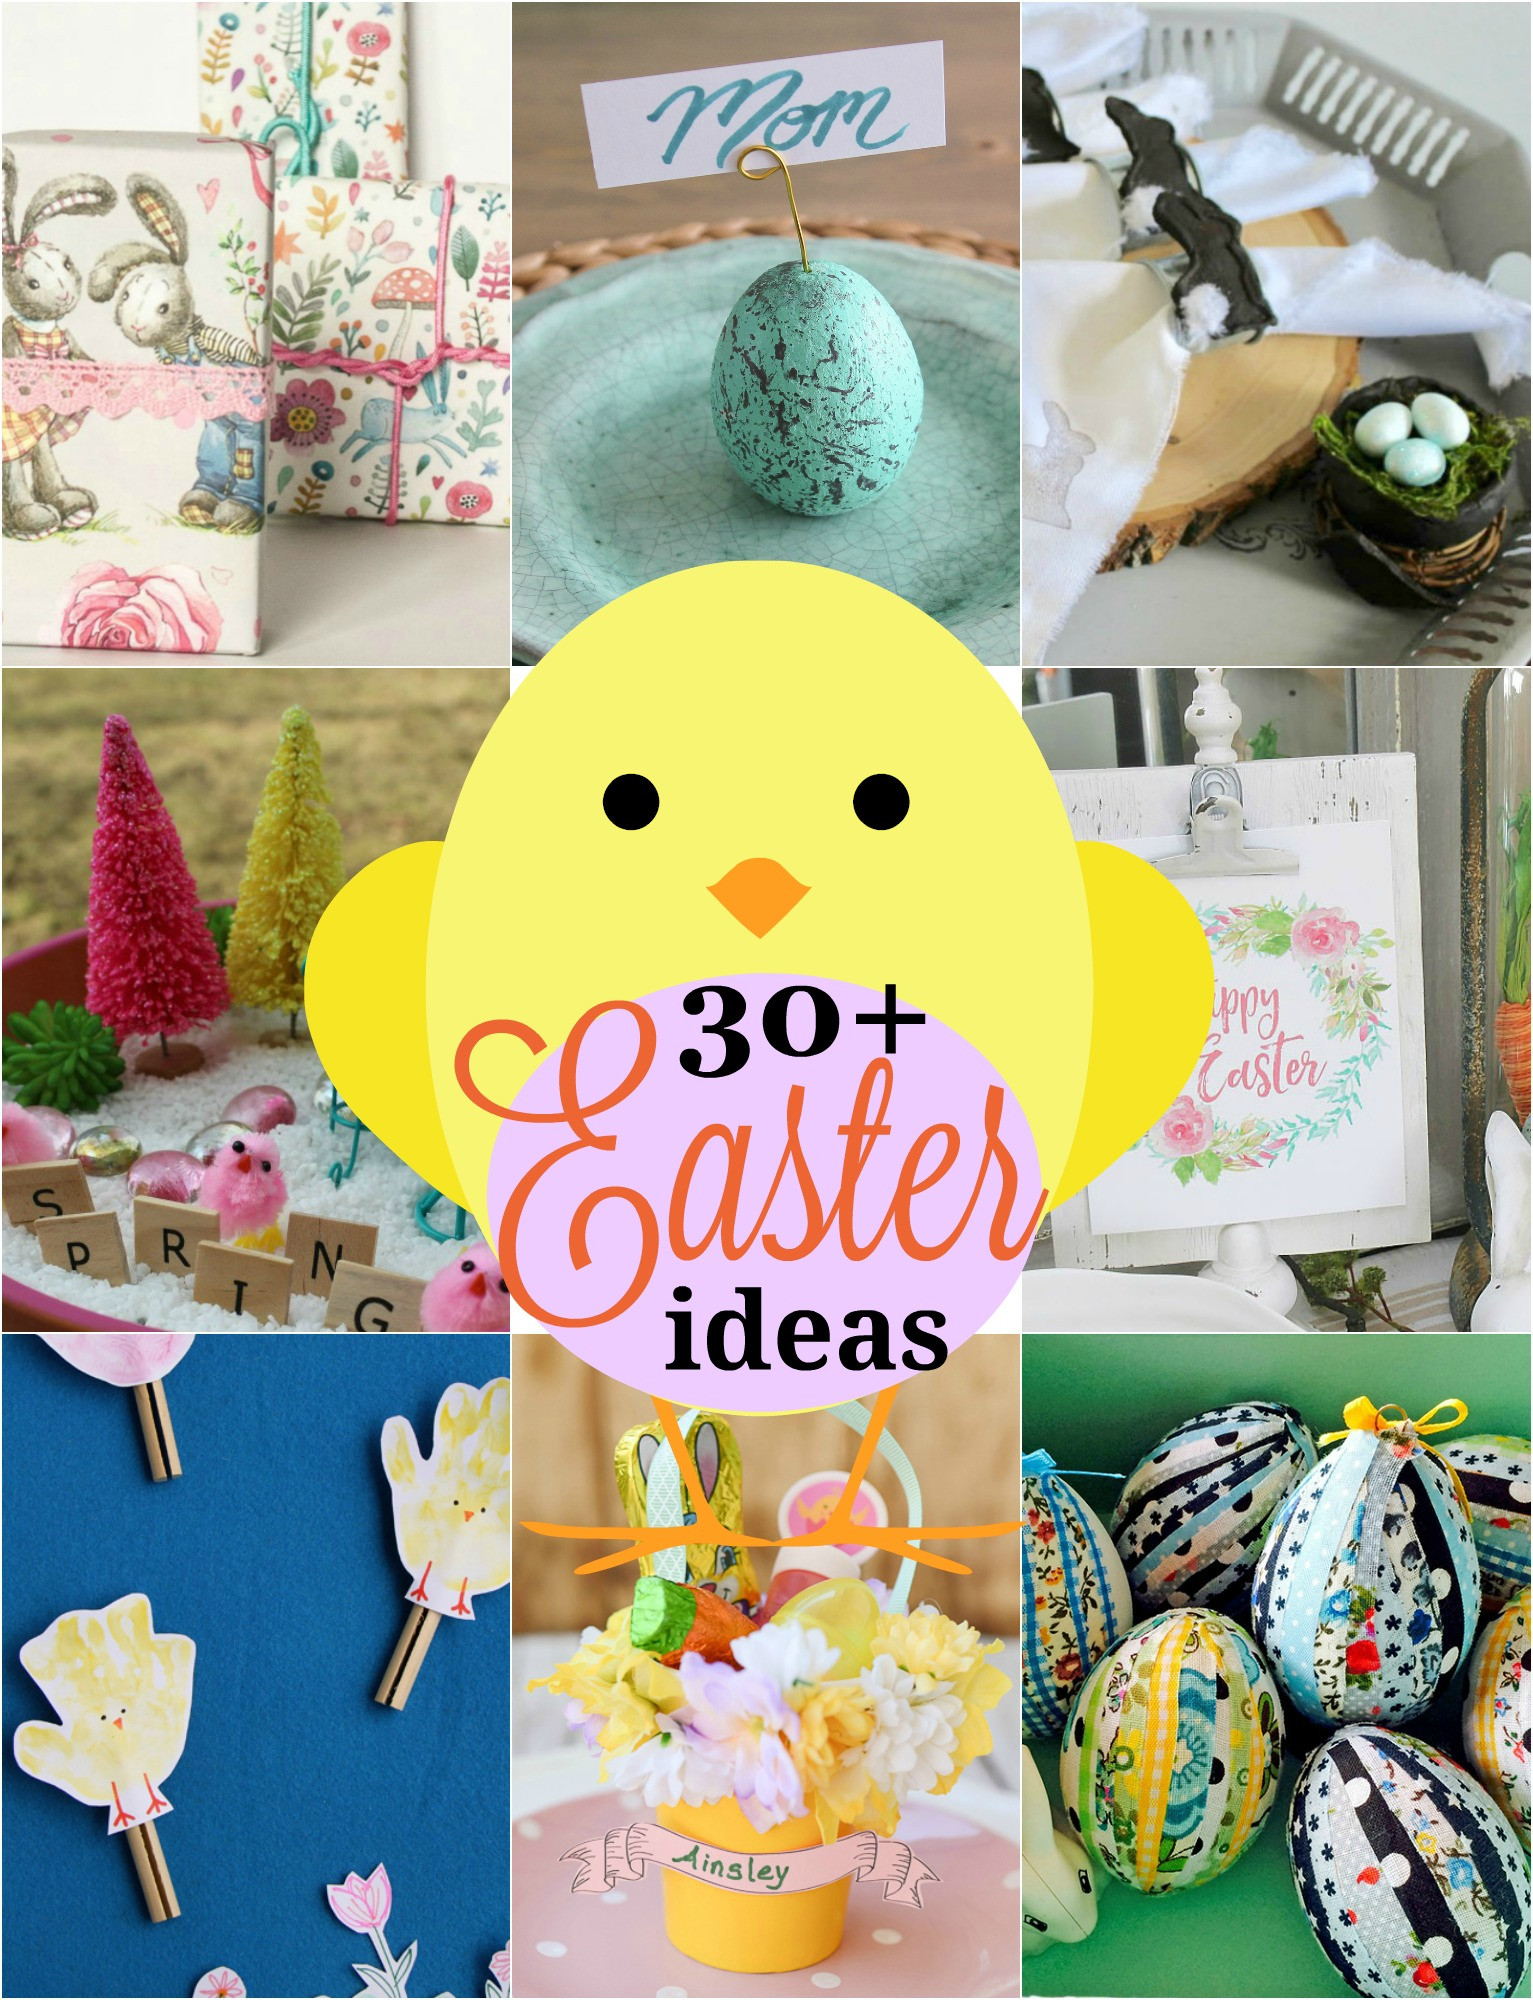 Easter Pinterest Ideas
 Adorable Easter Bunny Ideas